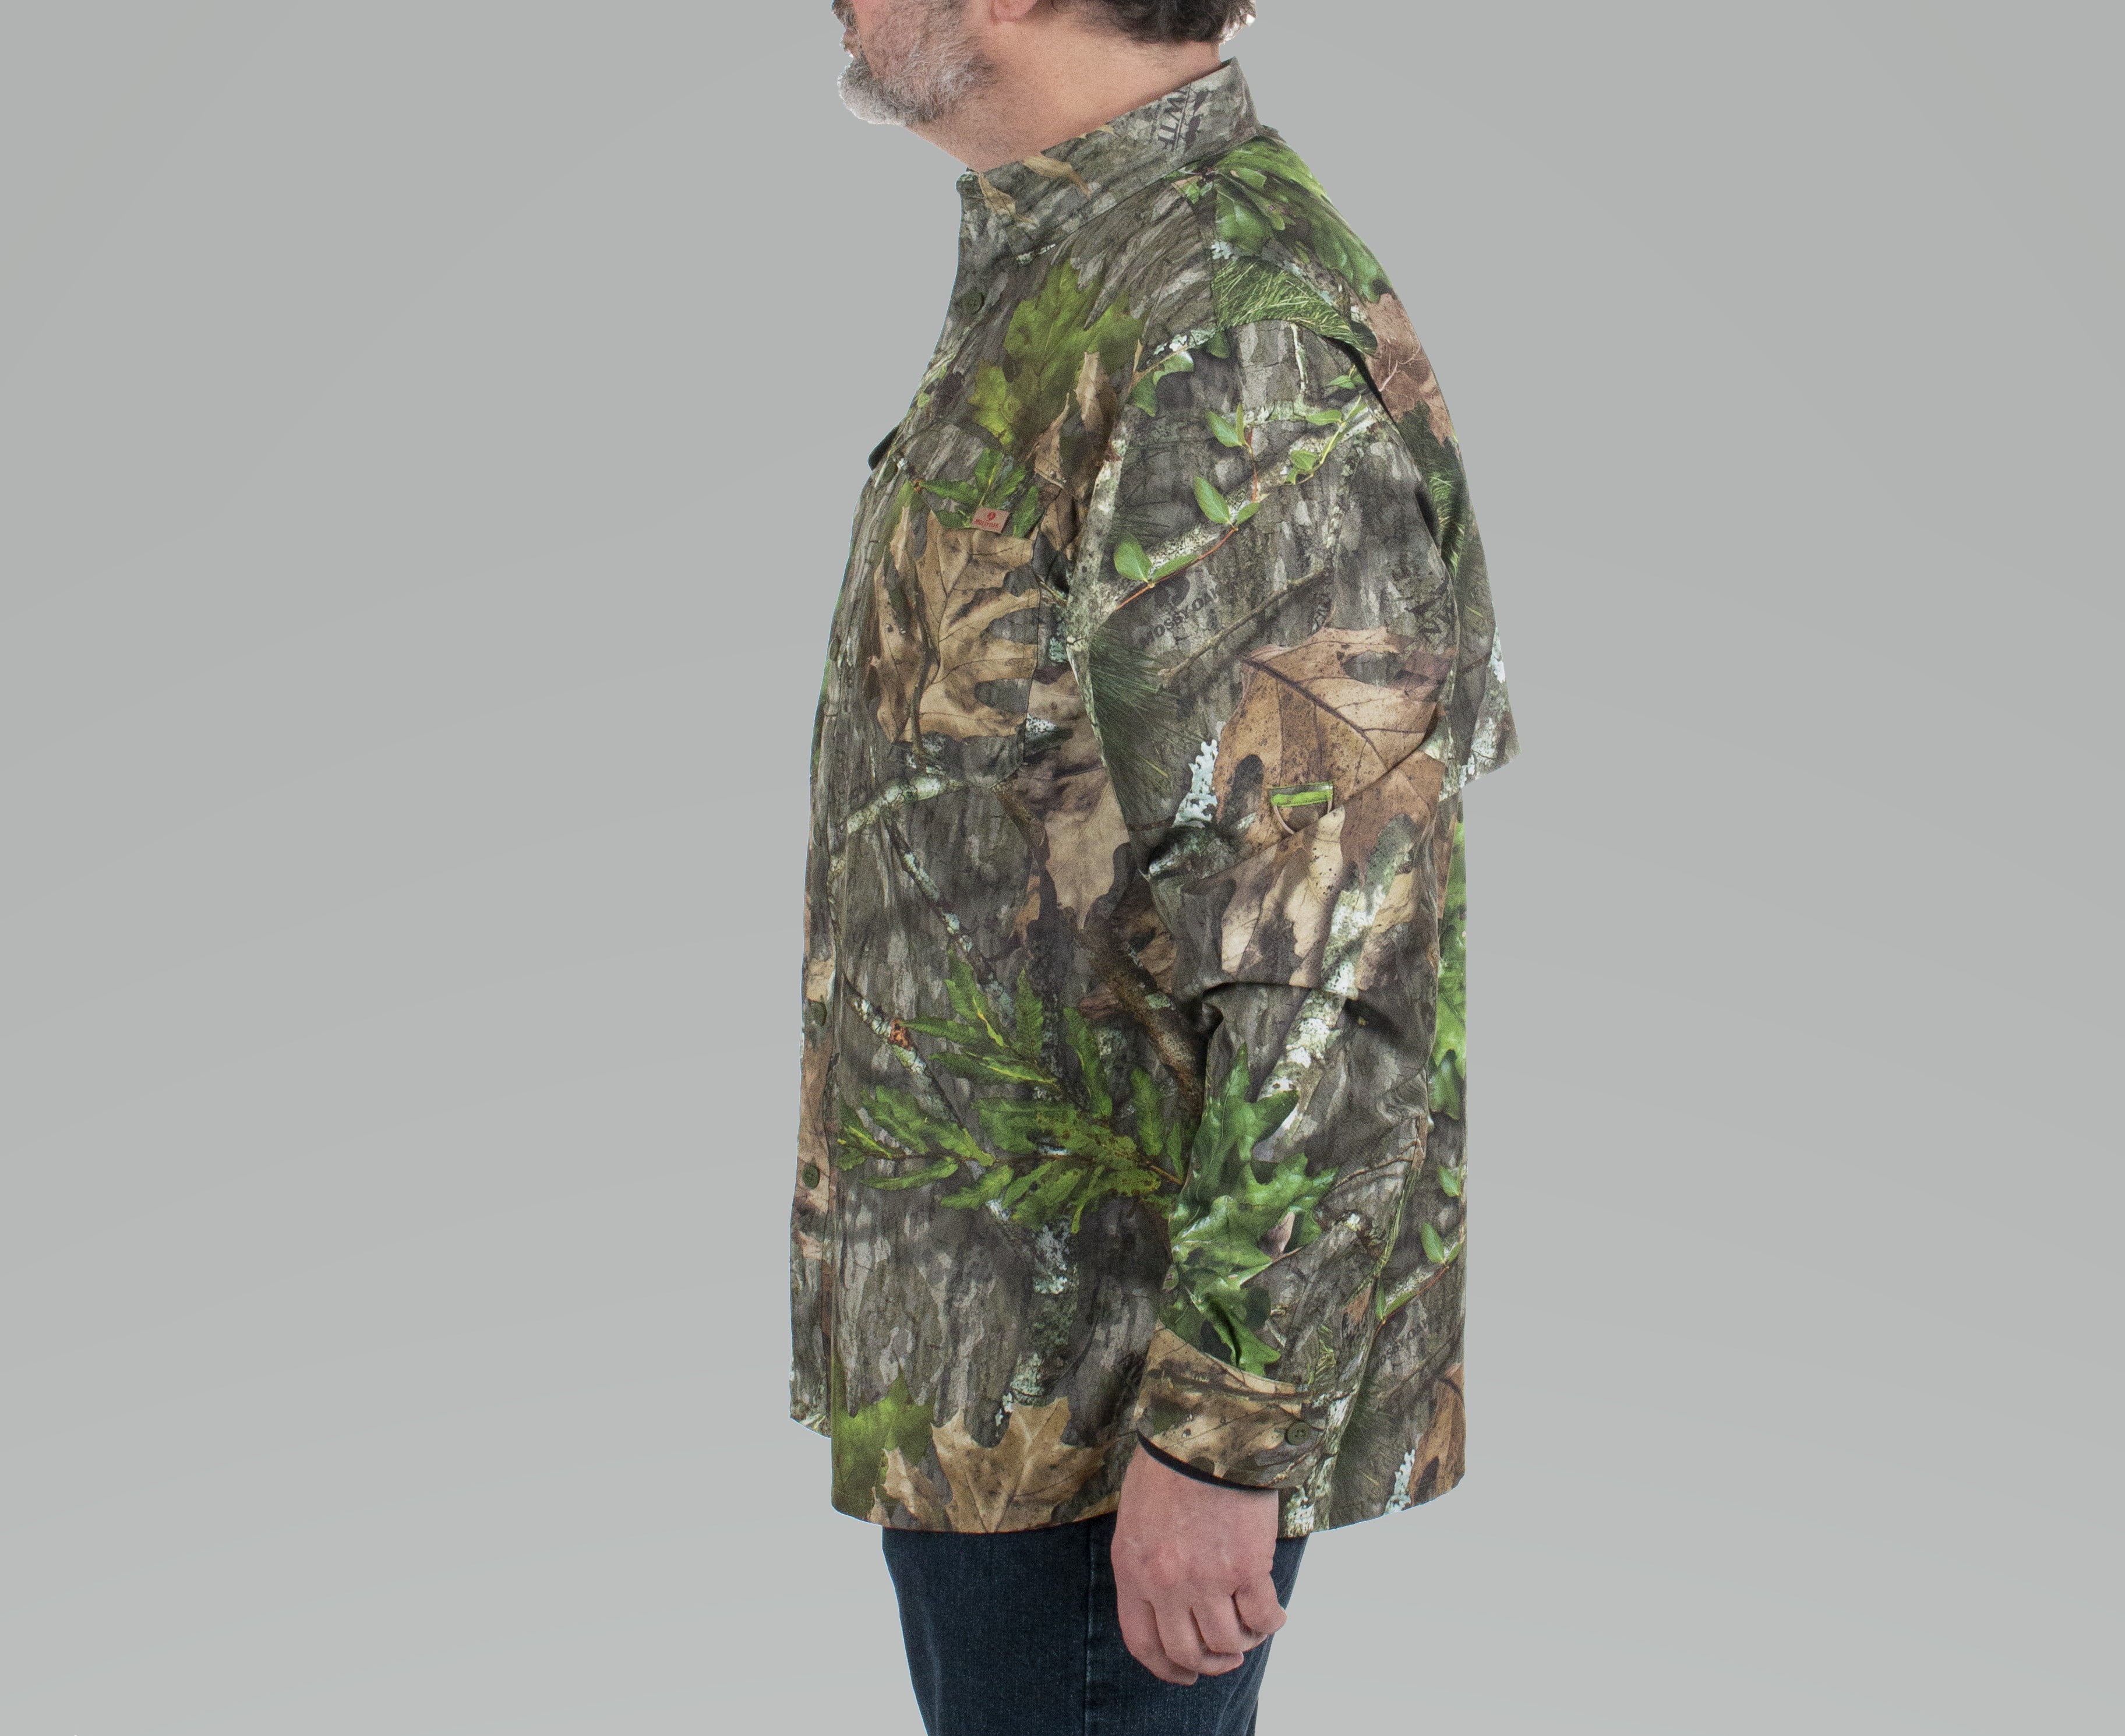 Mossy Oak Men's Long Sleeve Hunting Guide Shirt, Size Large